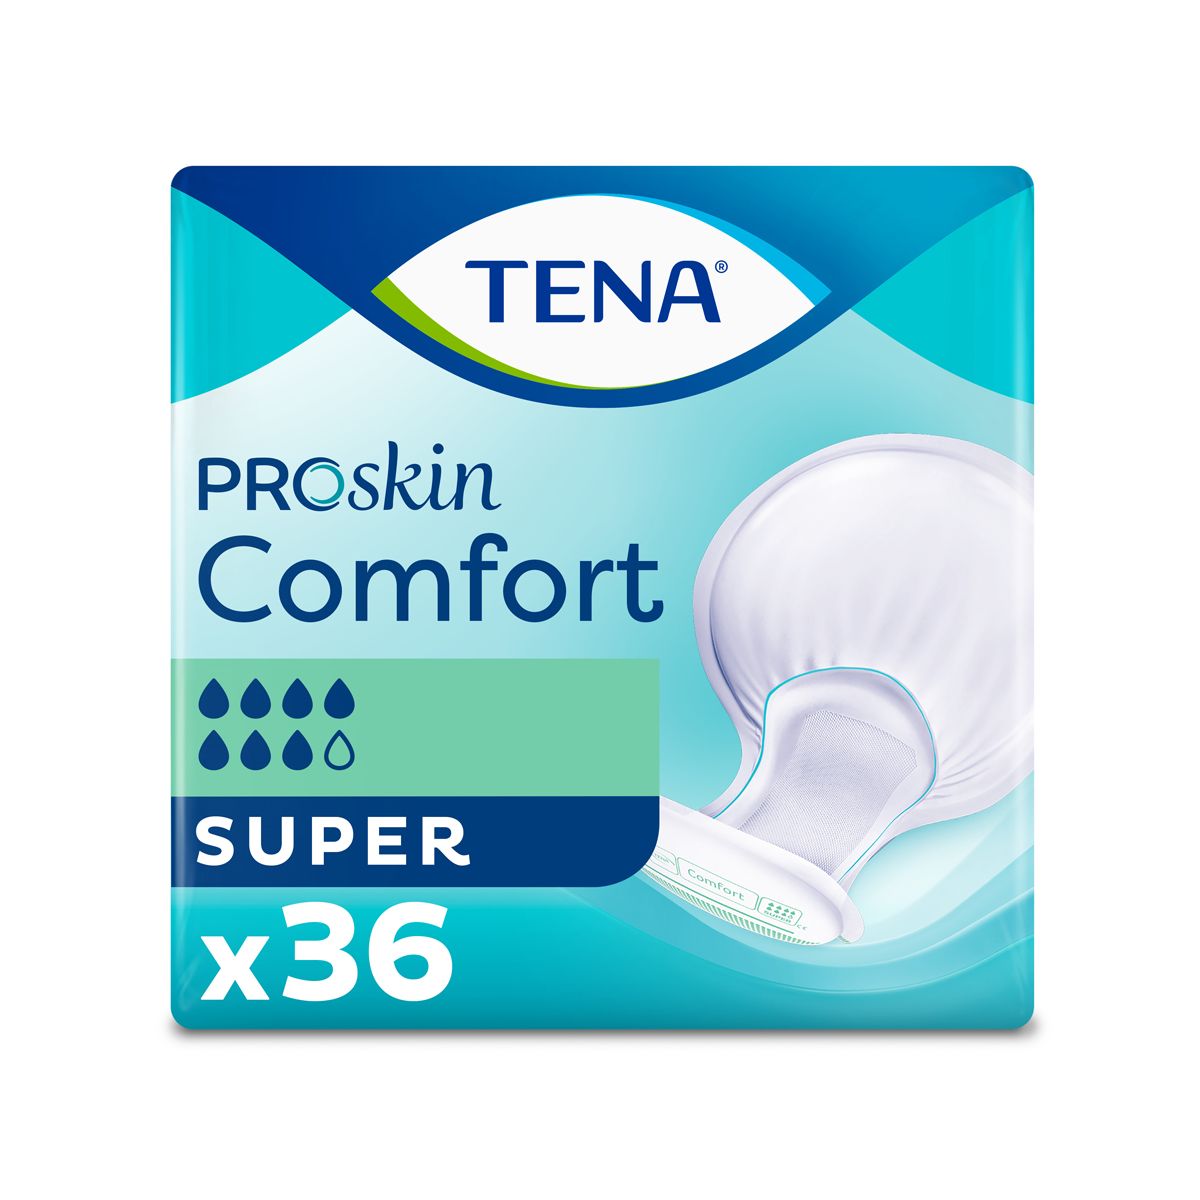 TENA ProSkin Comfort Super (2100ml) 36 Pack